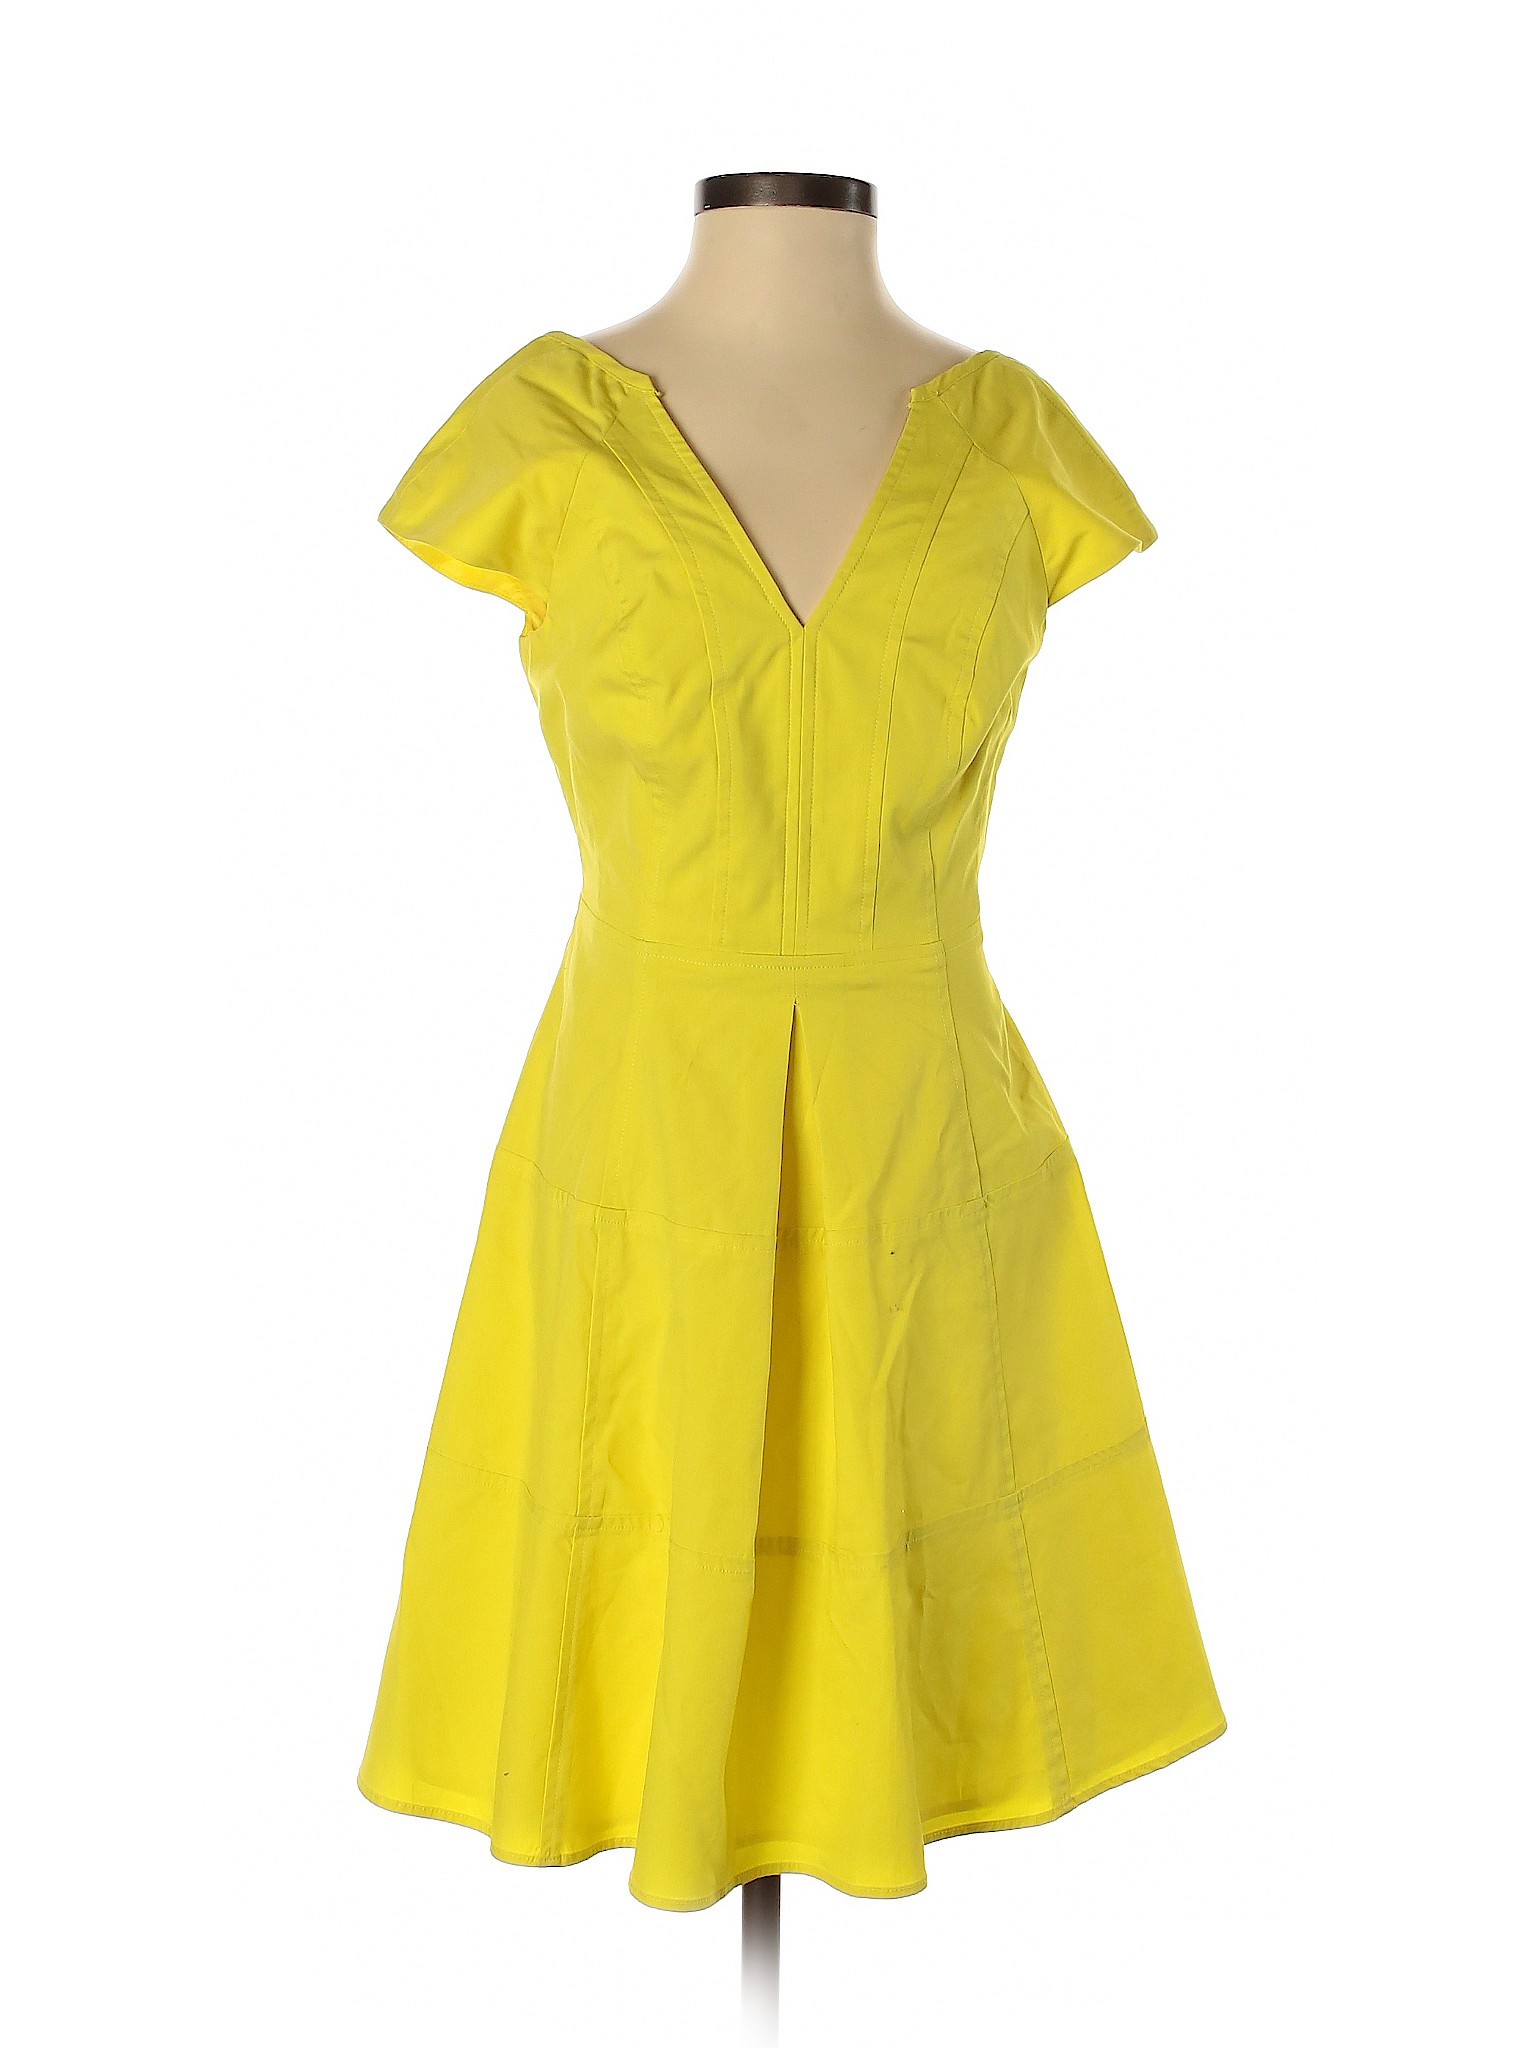 Nanette Lepore Women Yellow Casual Dress 0 | eBay